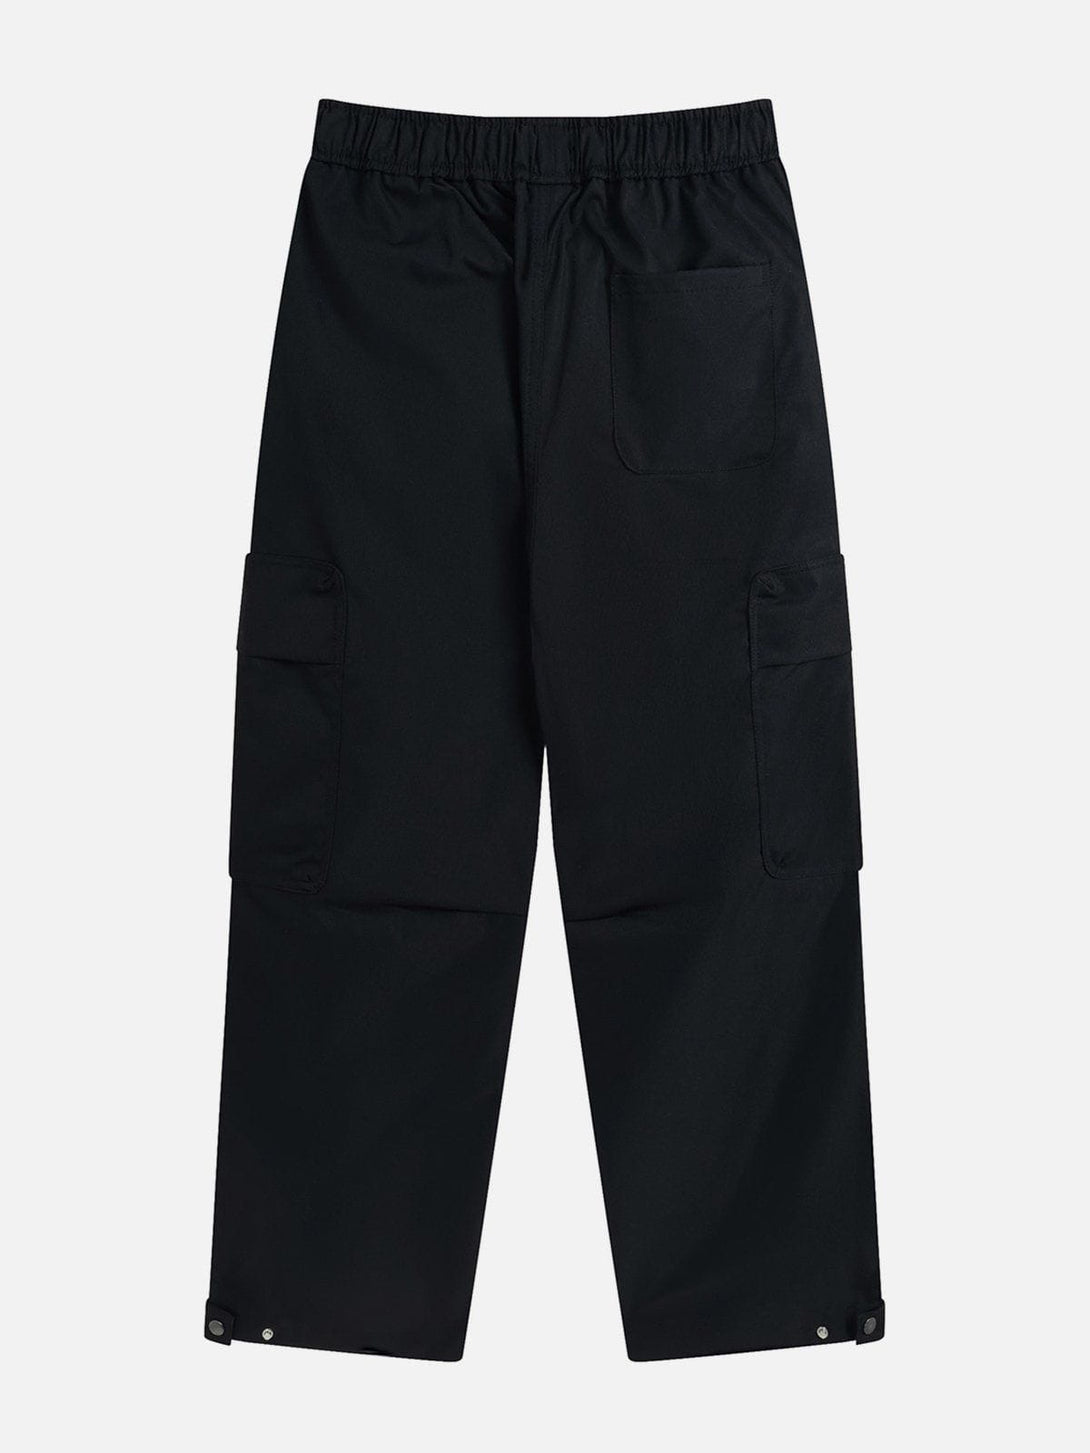 Majesda® - Large Pocket Cargo Pants outfit ideas streetwear fashion